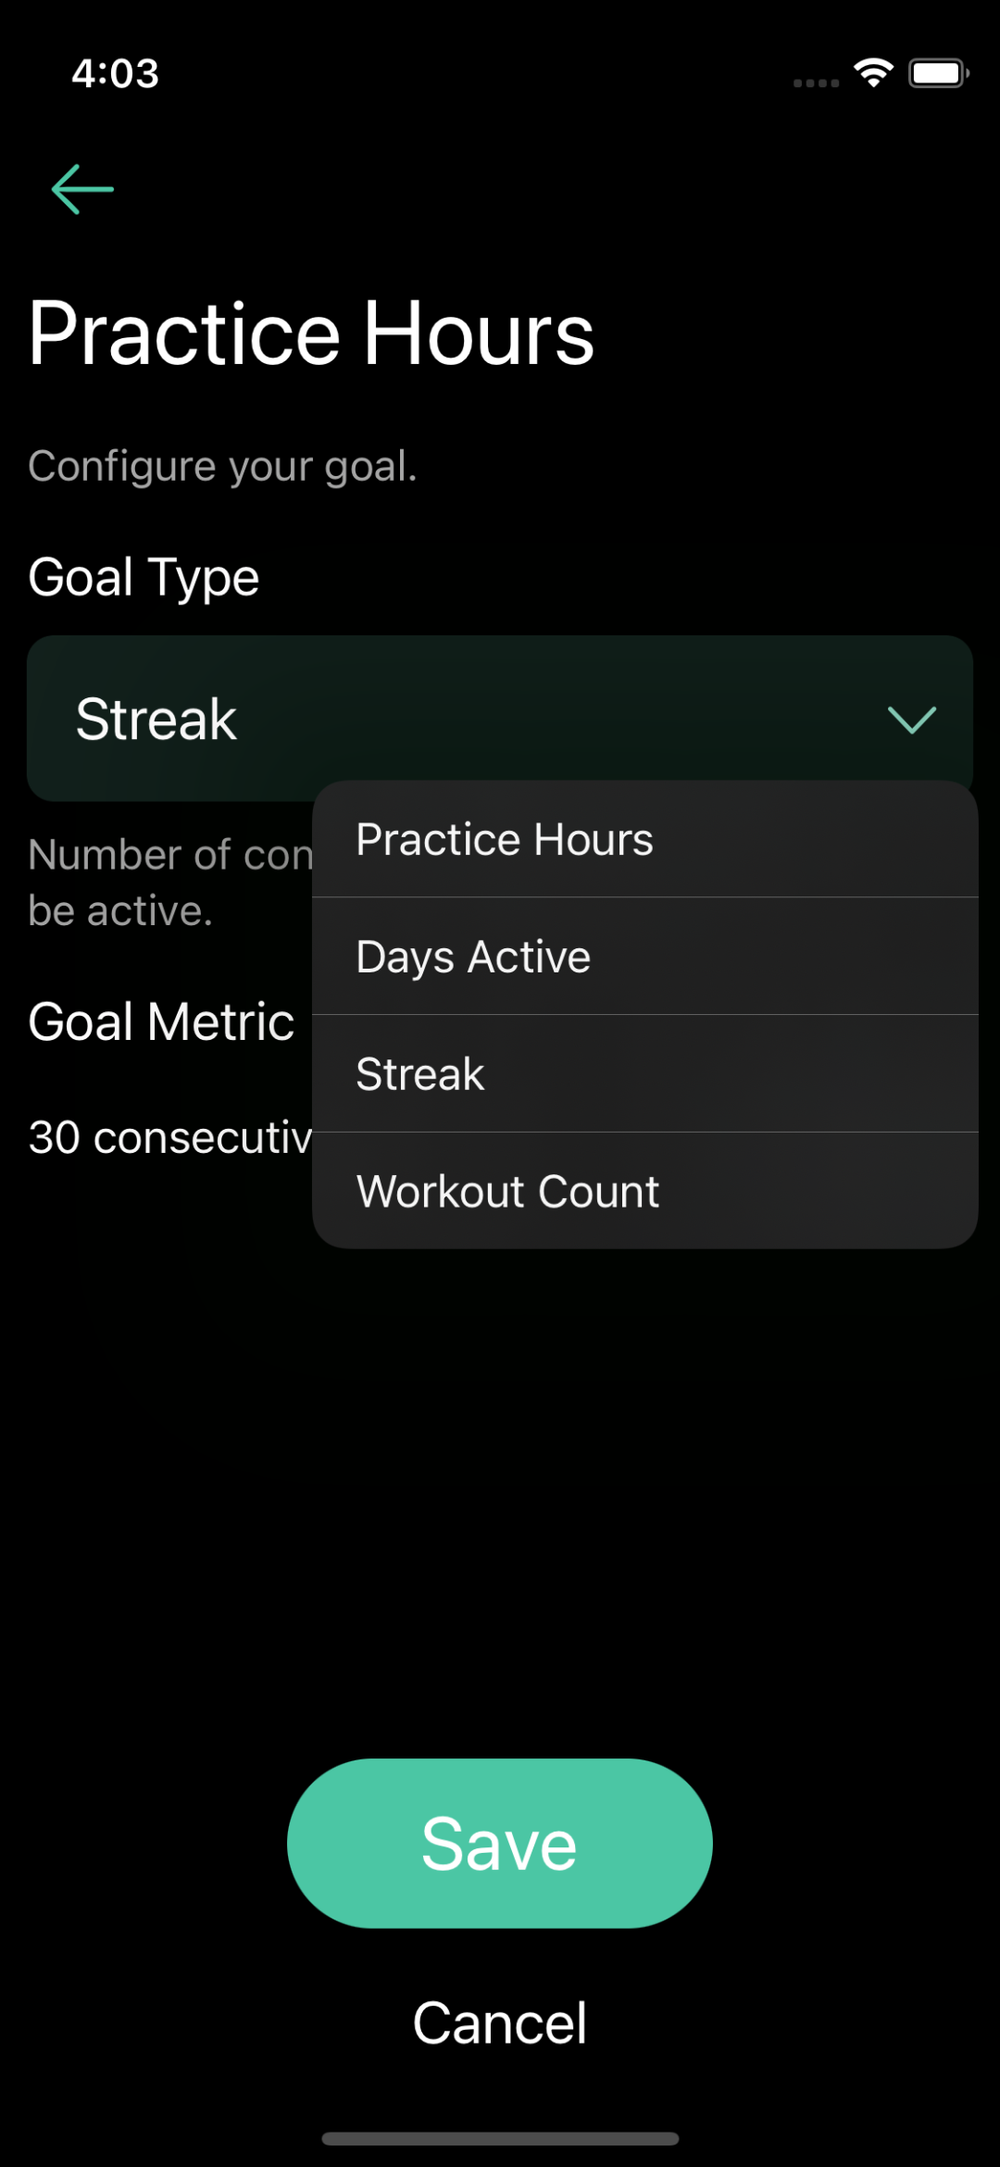 Configure Streak goal for 30 days